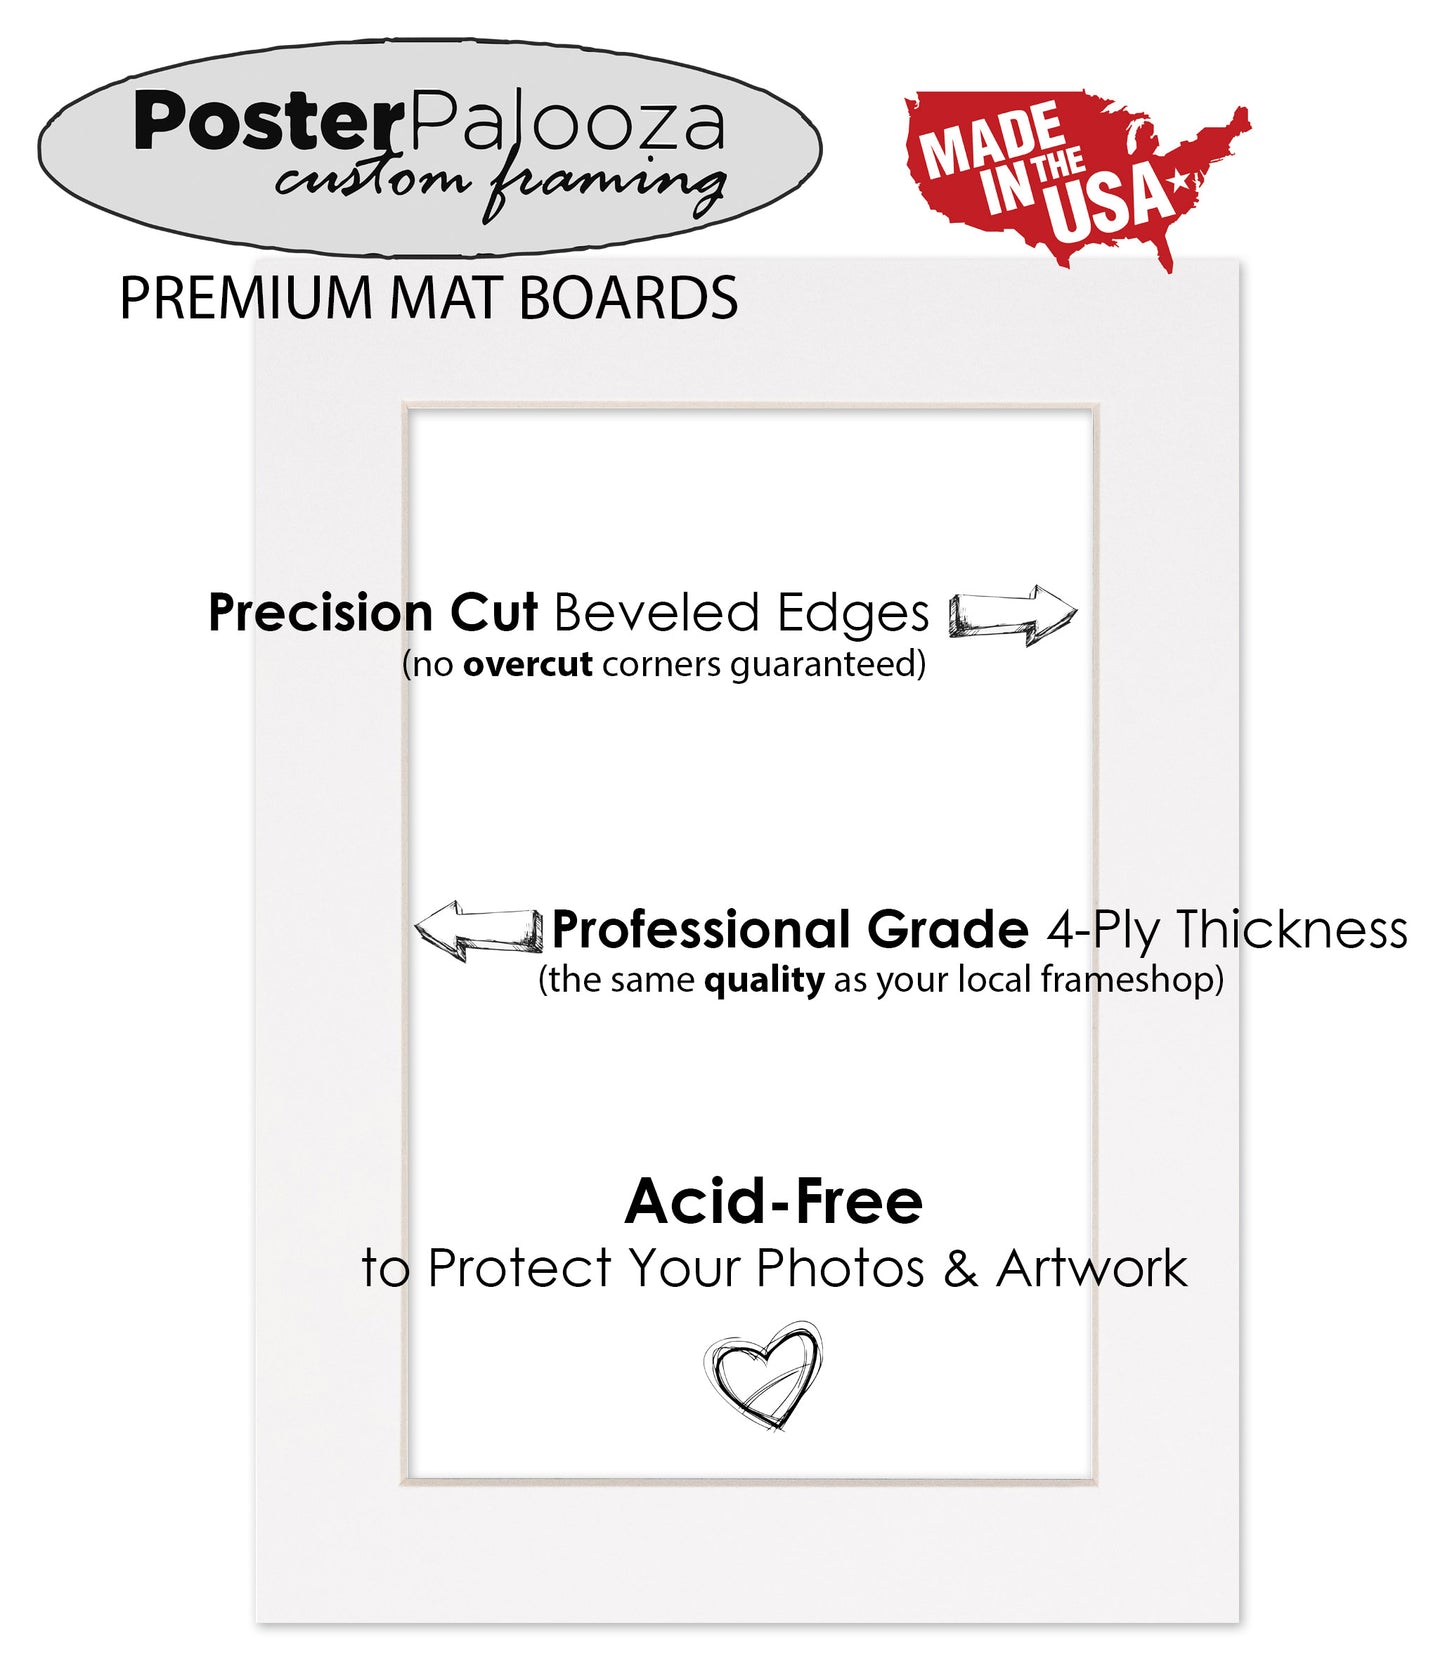 Pack of 25 Hunter Green Precut Acid-Free Matboards